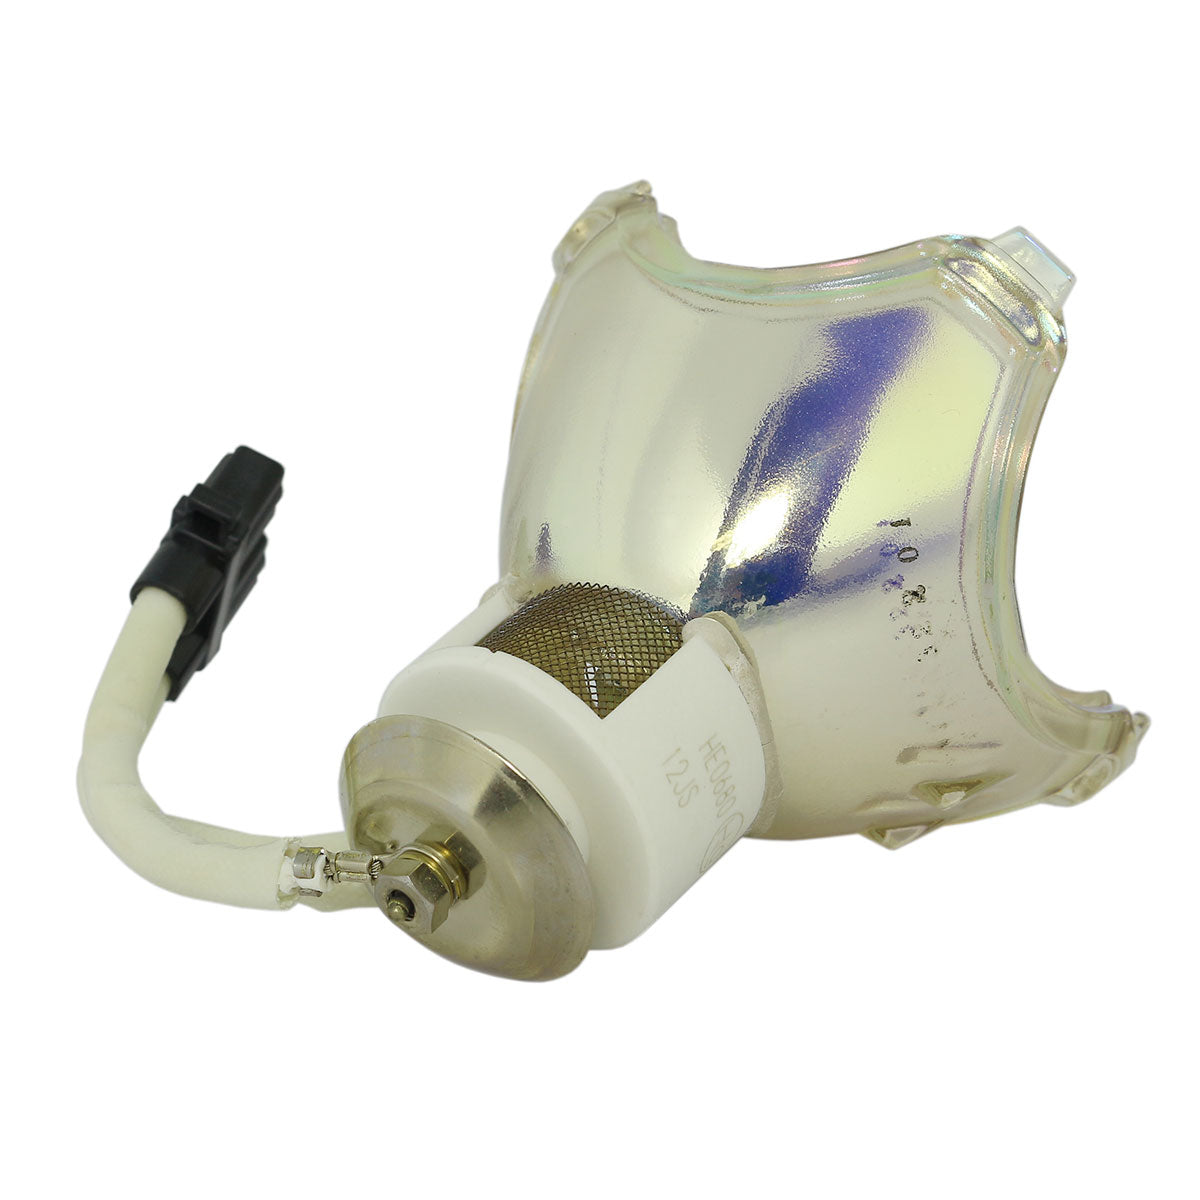 Dukane 456-8805 Ushio Projector Bare Lamp